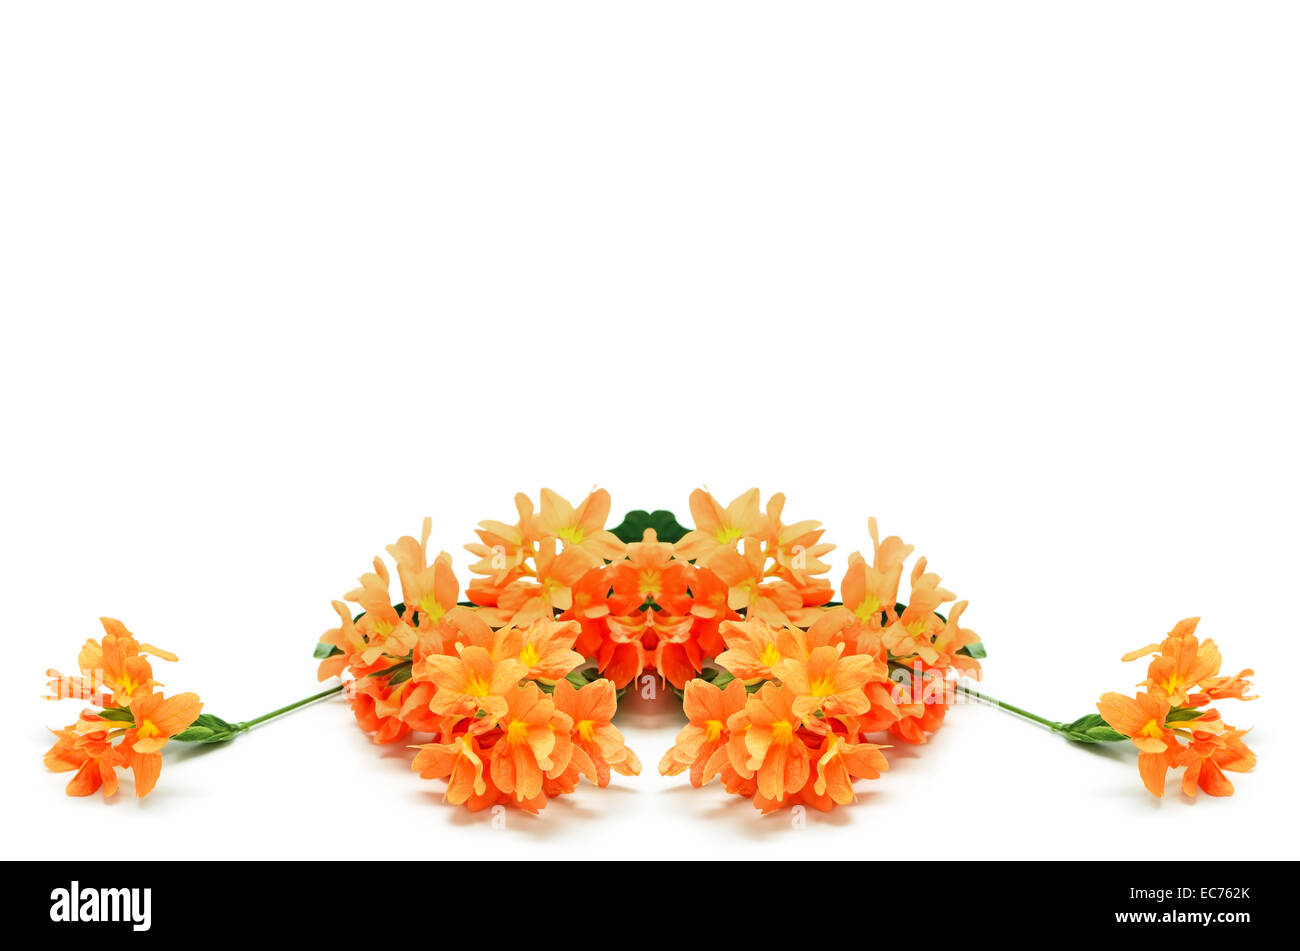 Bel colore arancione petardo fiore (Crossandra infundibuliformis), isolata su uno sfondo bianco Foto Stock